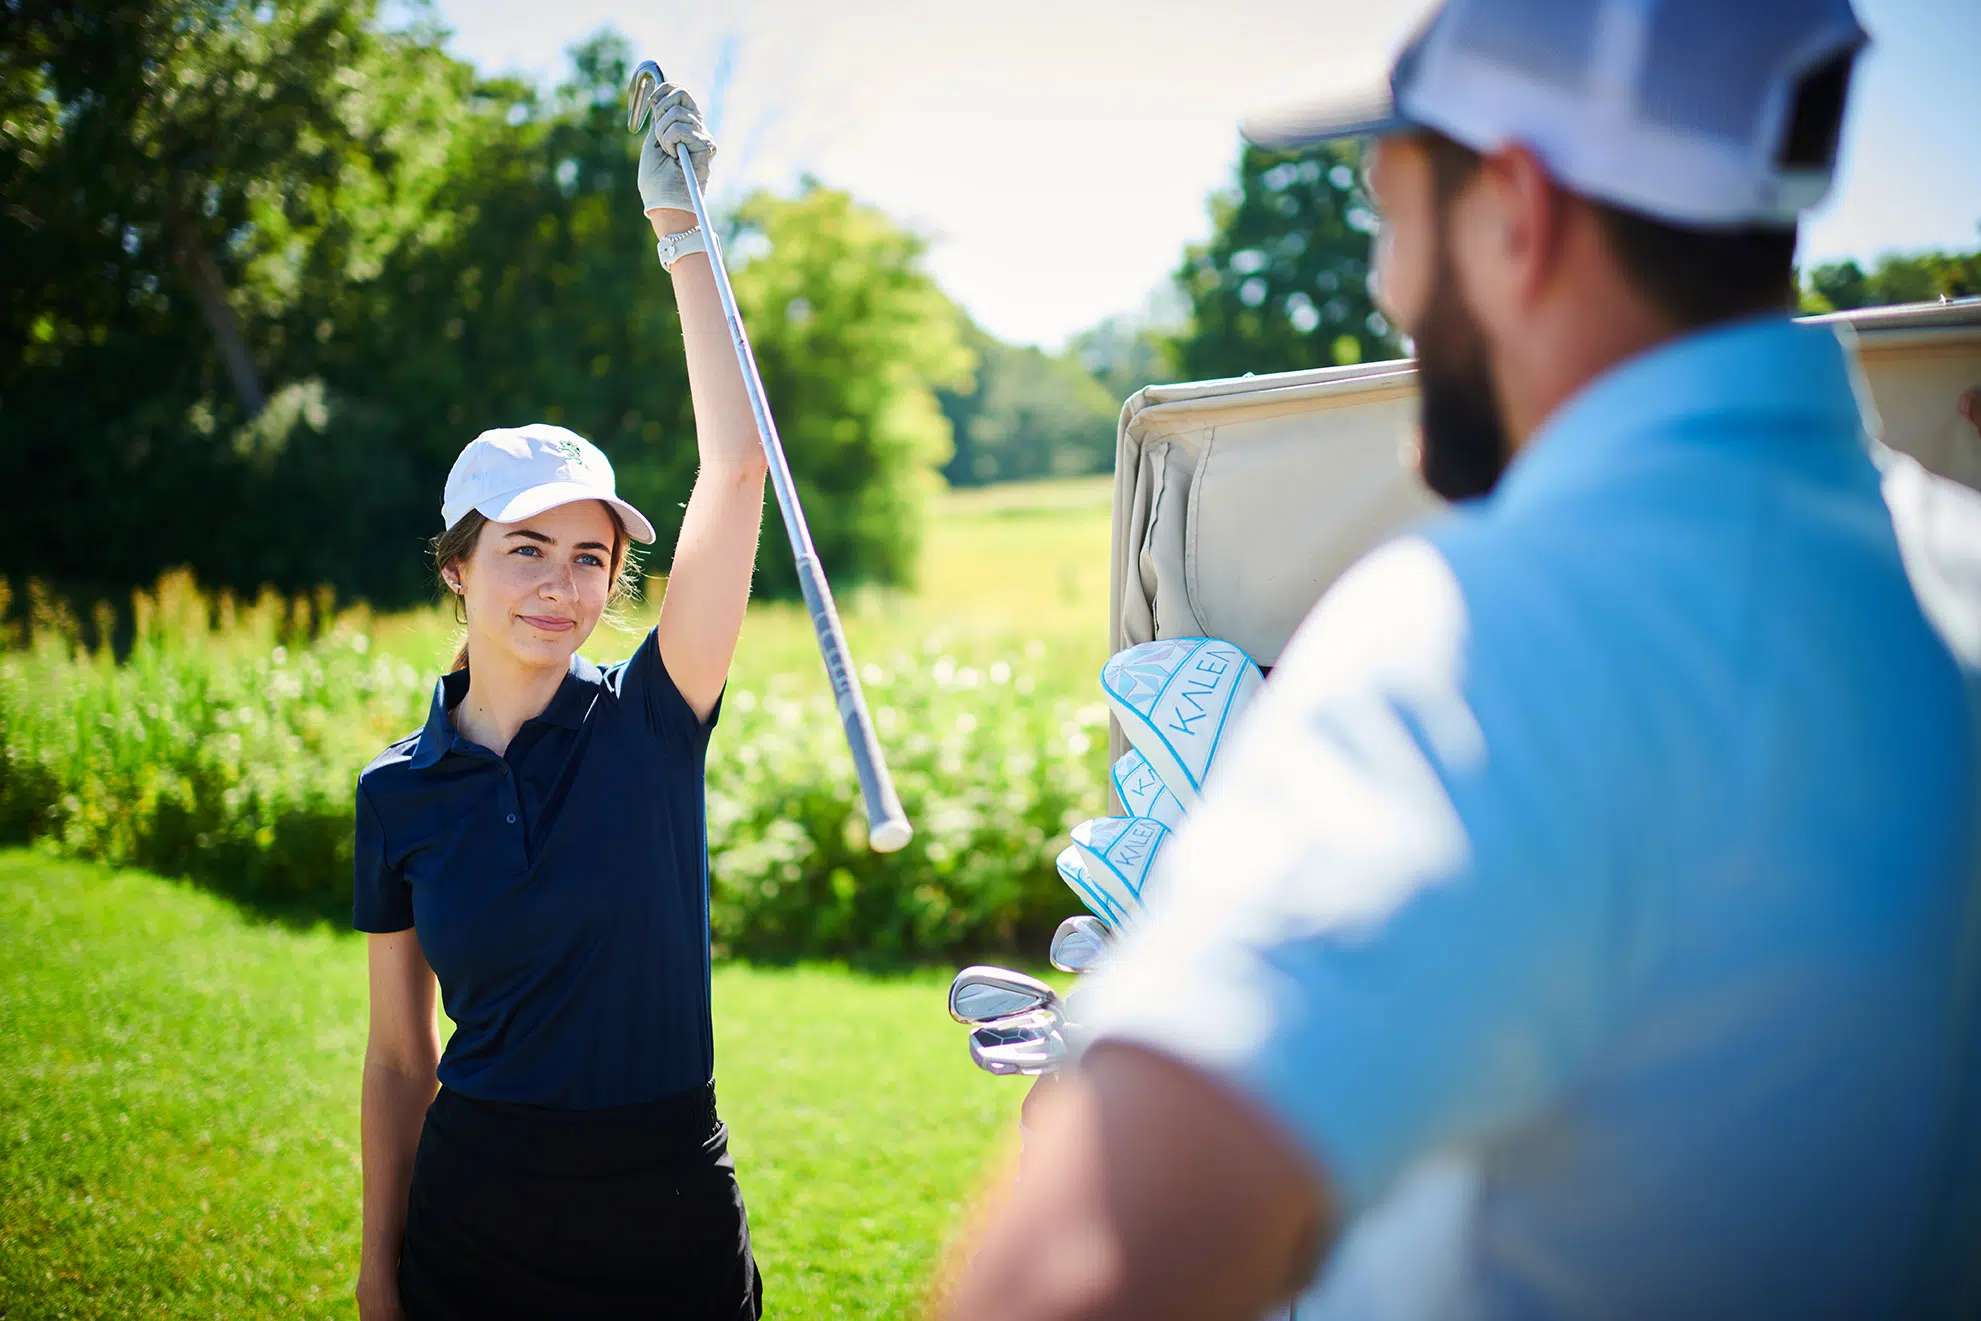 A female golfer removes a club from a golf bag.